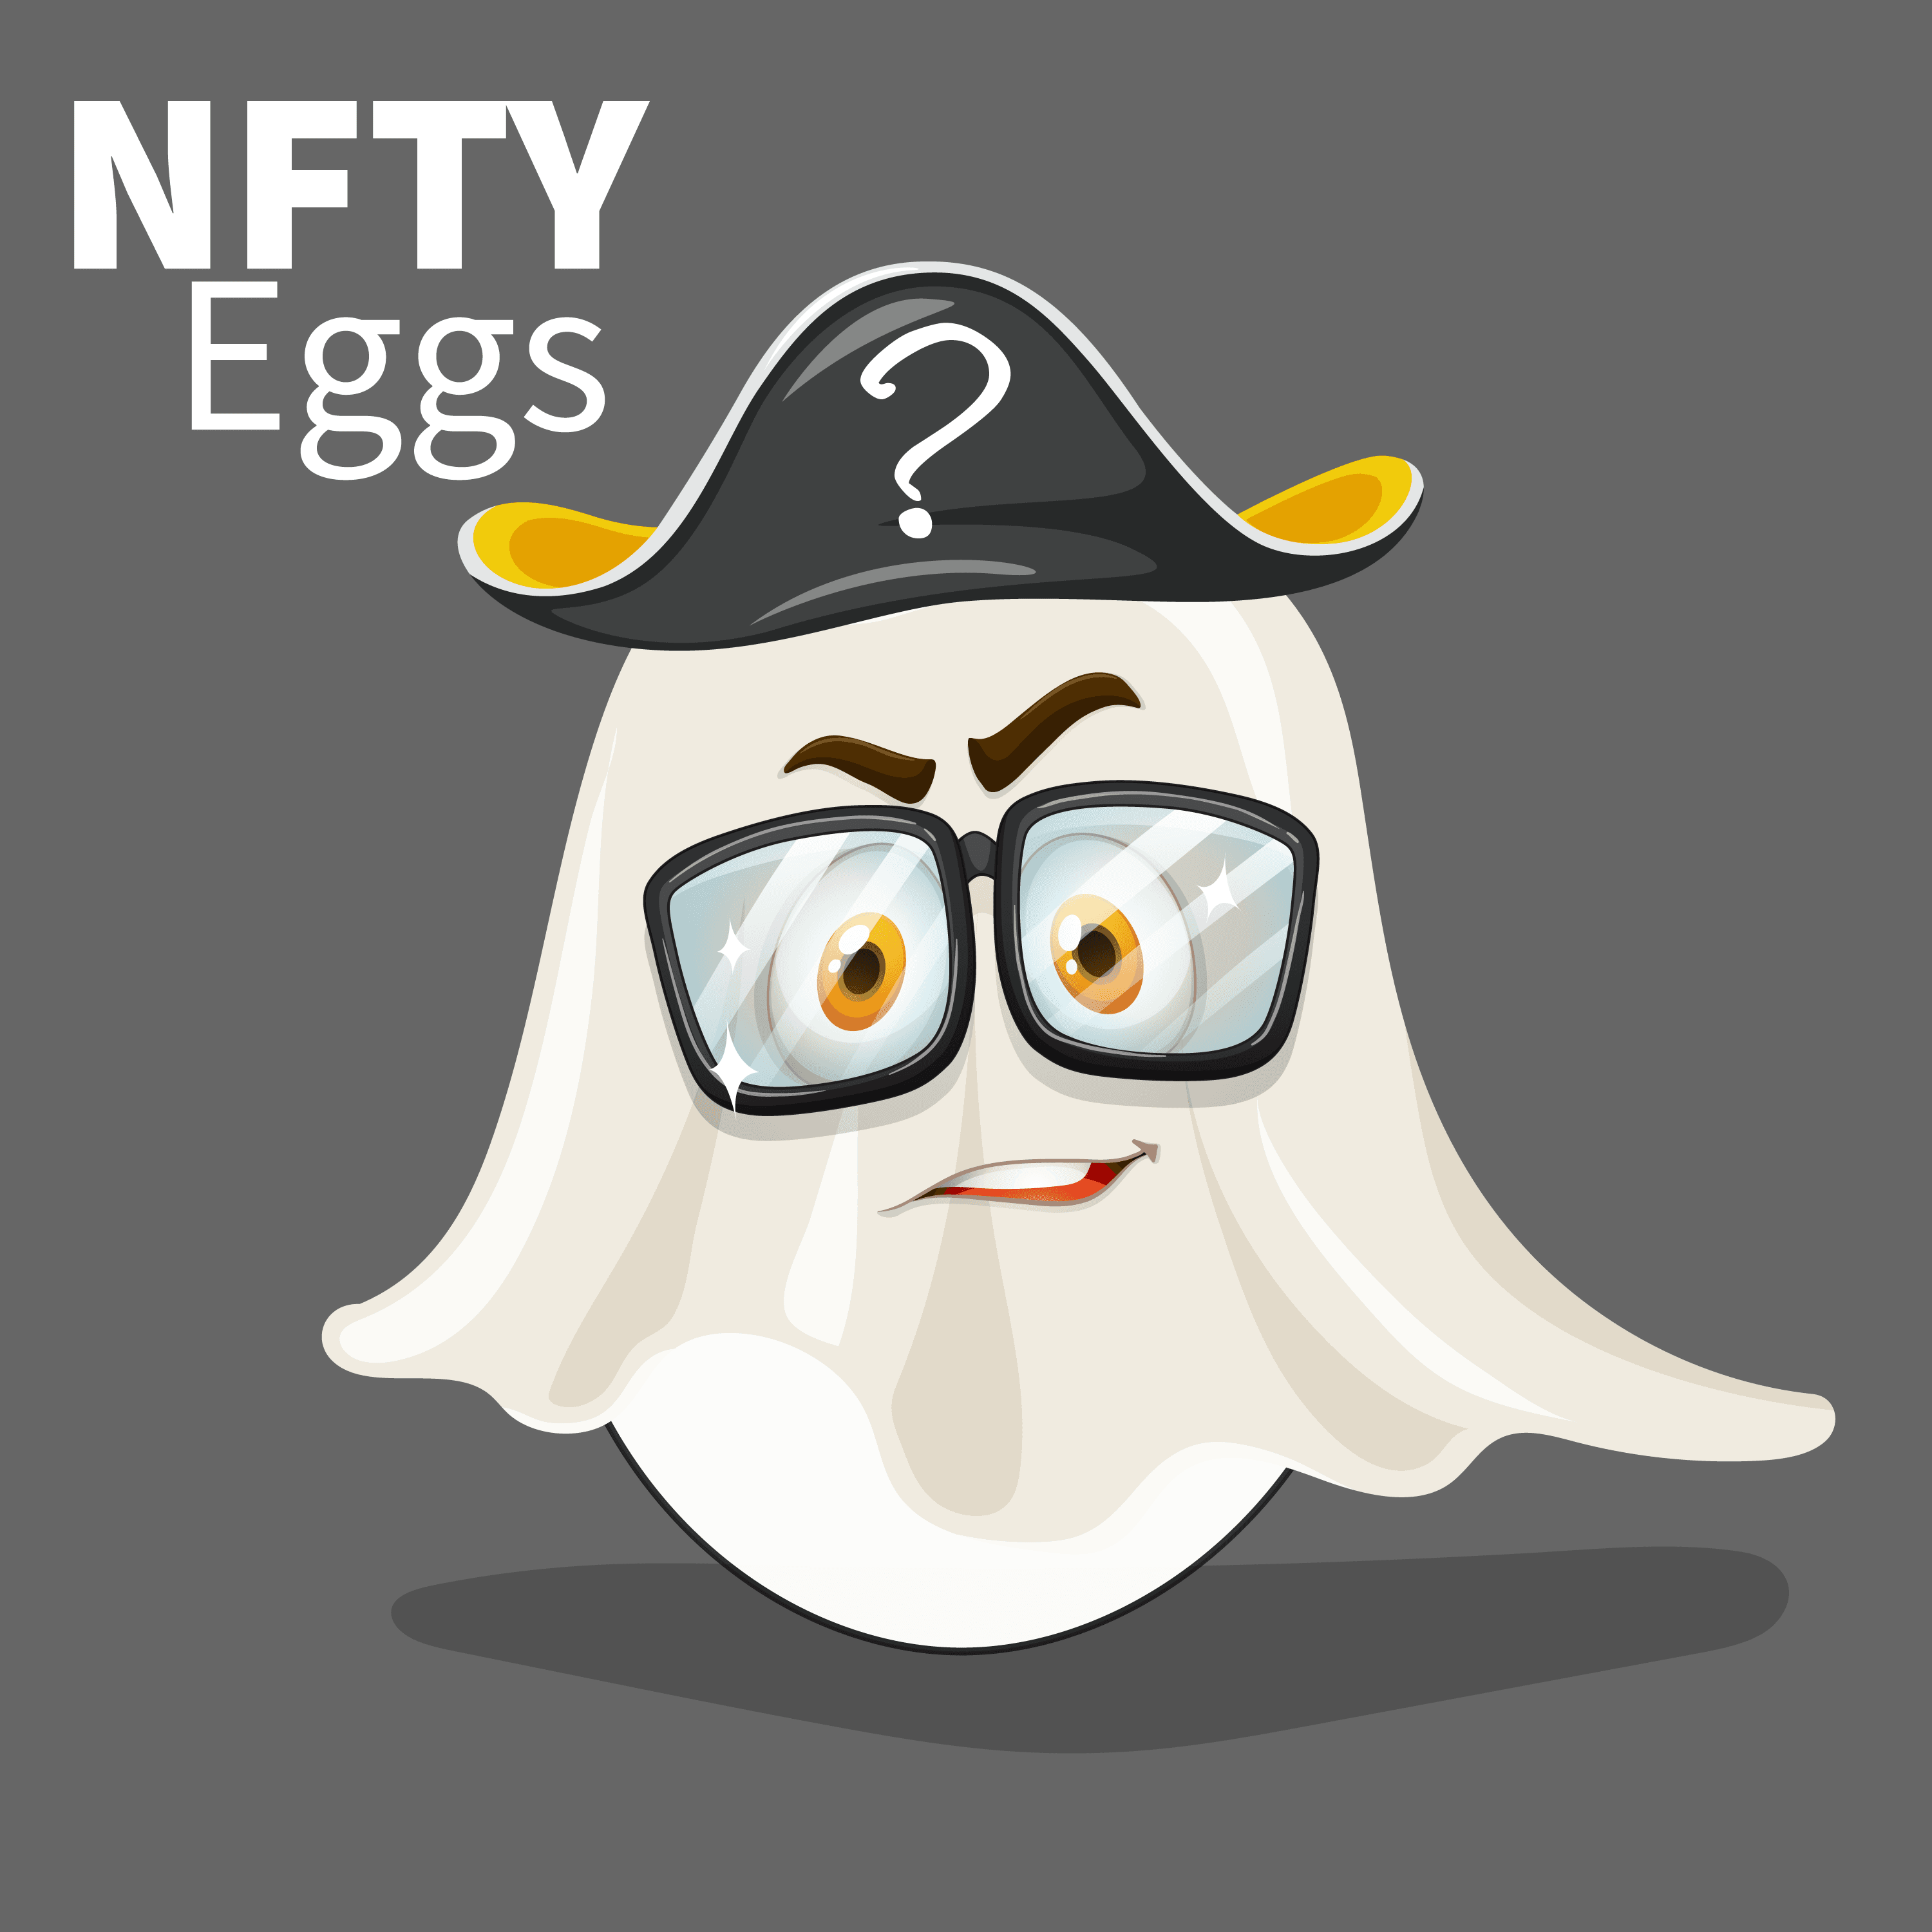 NFTY Eggs